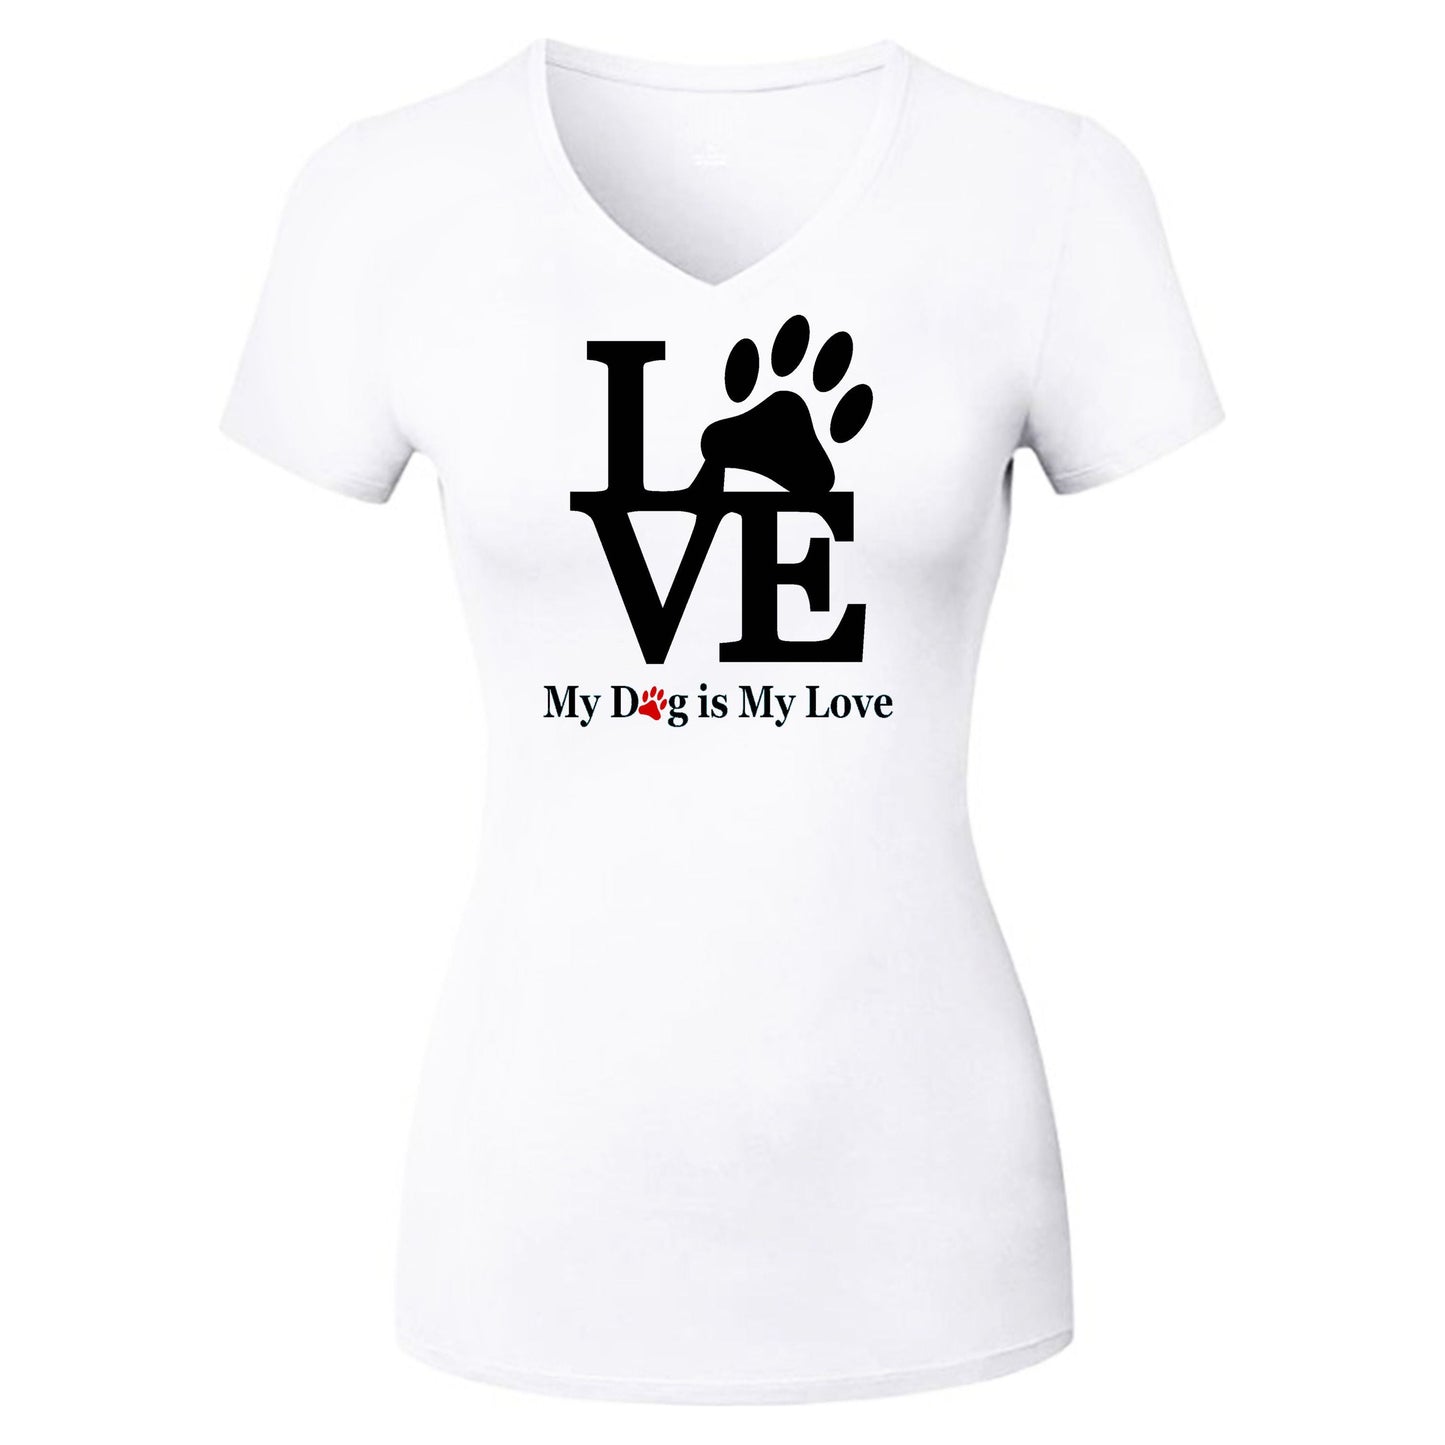 My Dog Is My Love T Shirt